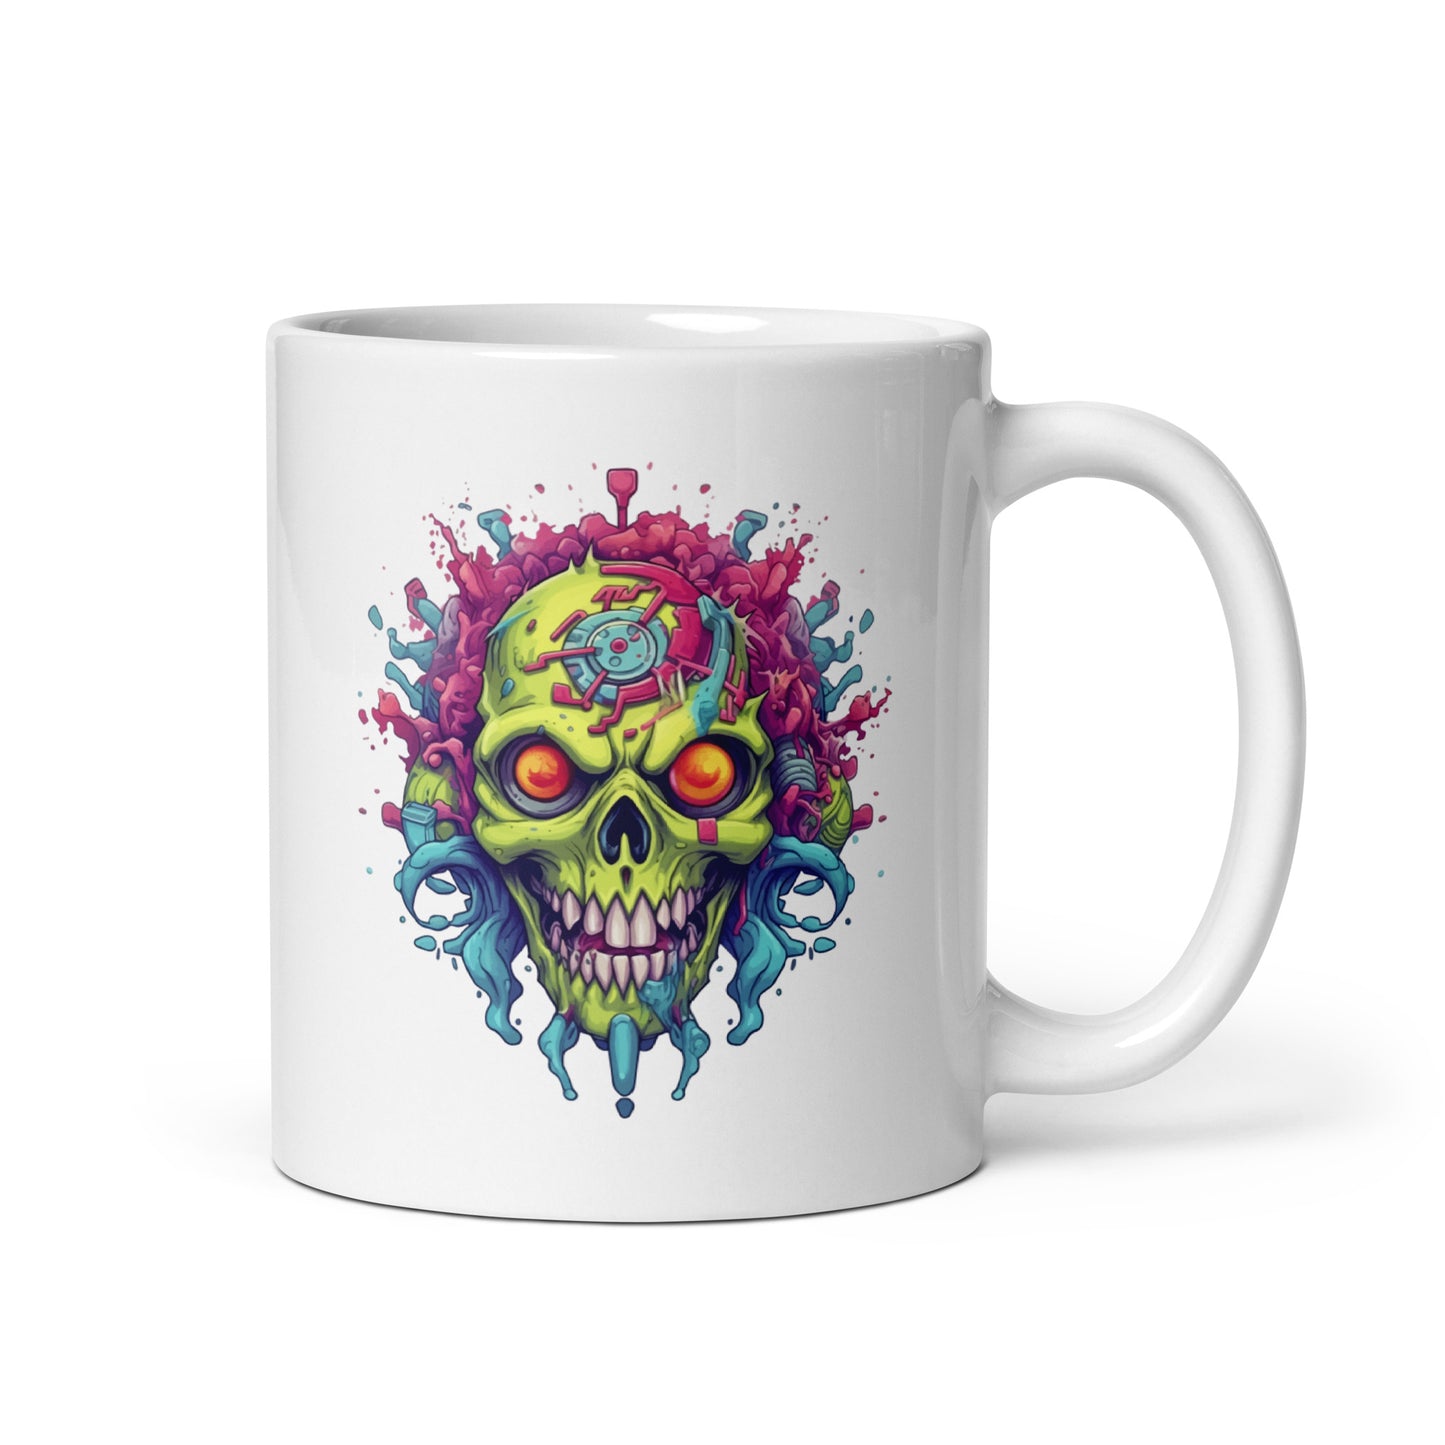 2d game art, Hellish skull, Electronic zombie, Colorful splashes, Cyberpunk futurism, Graffiti style illustration, Neon electric colors - White glossy mug